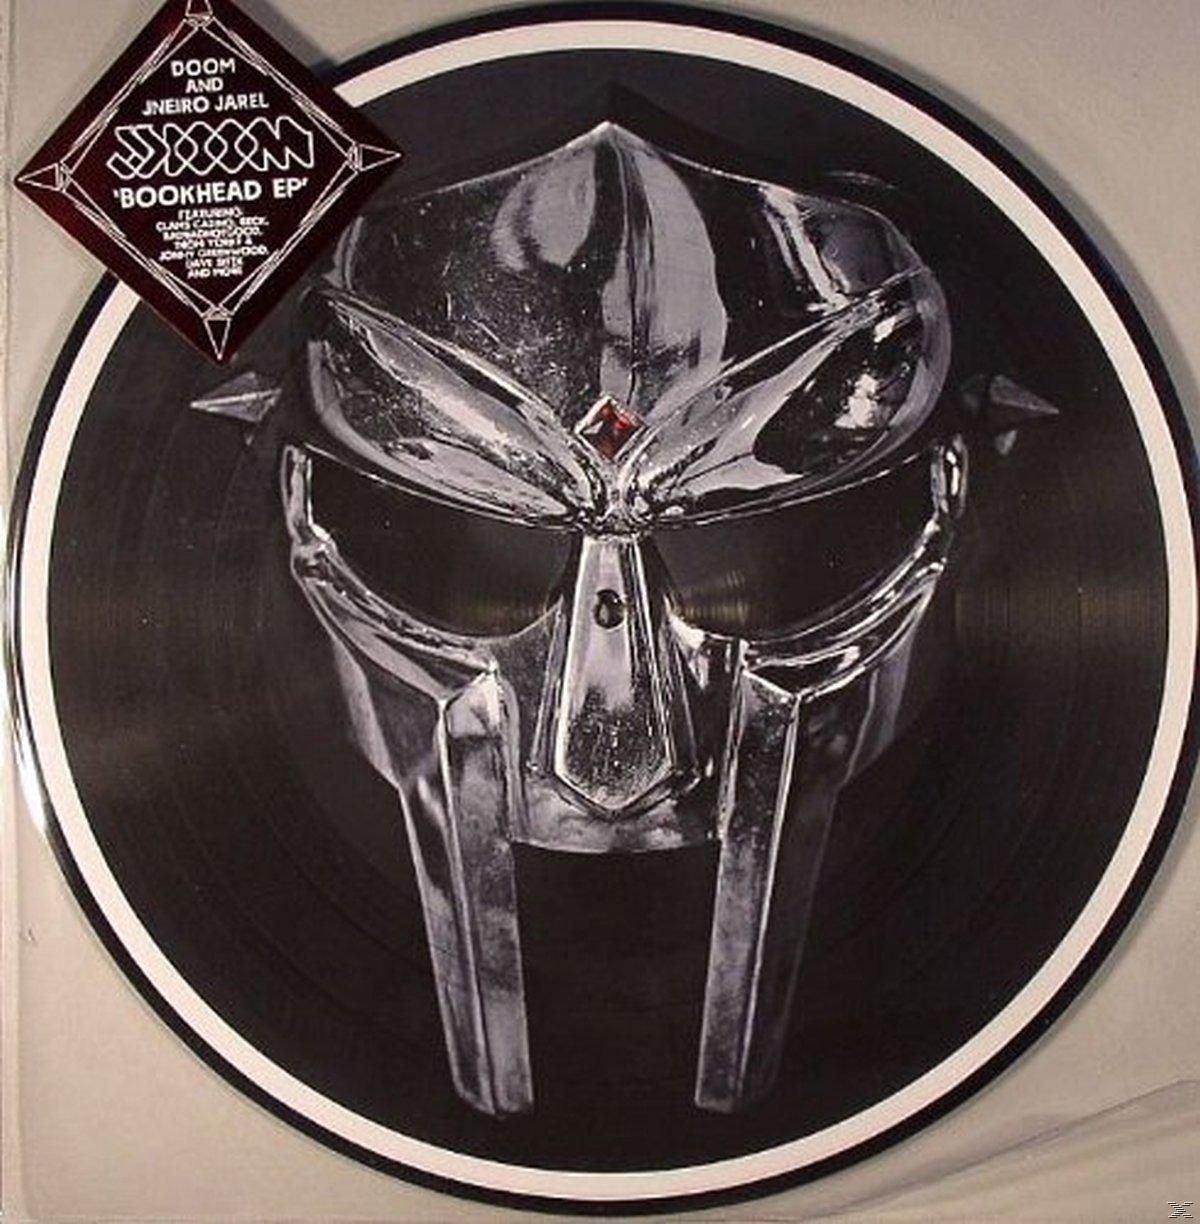 Jj Doom - - (analog)) EP Bookhead (EP